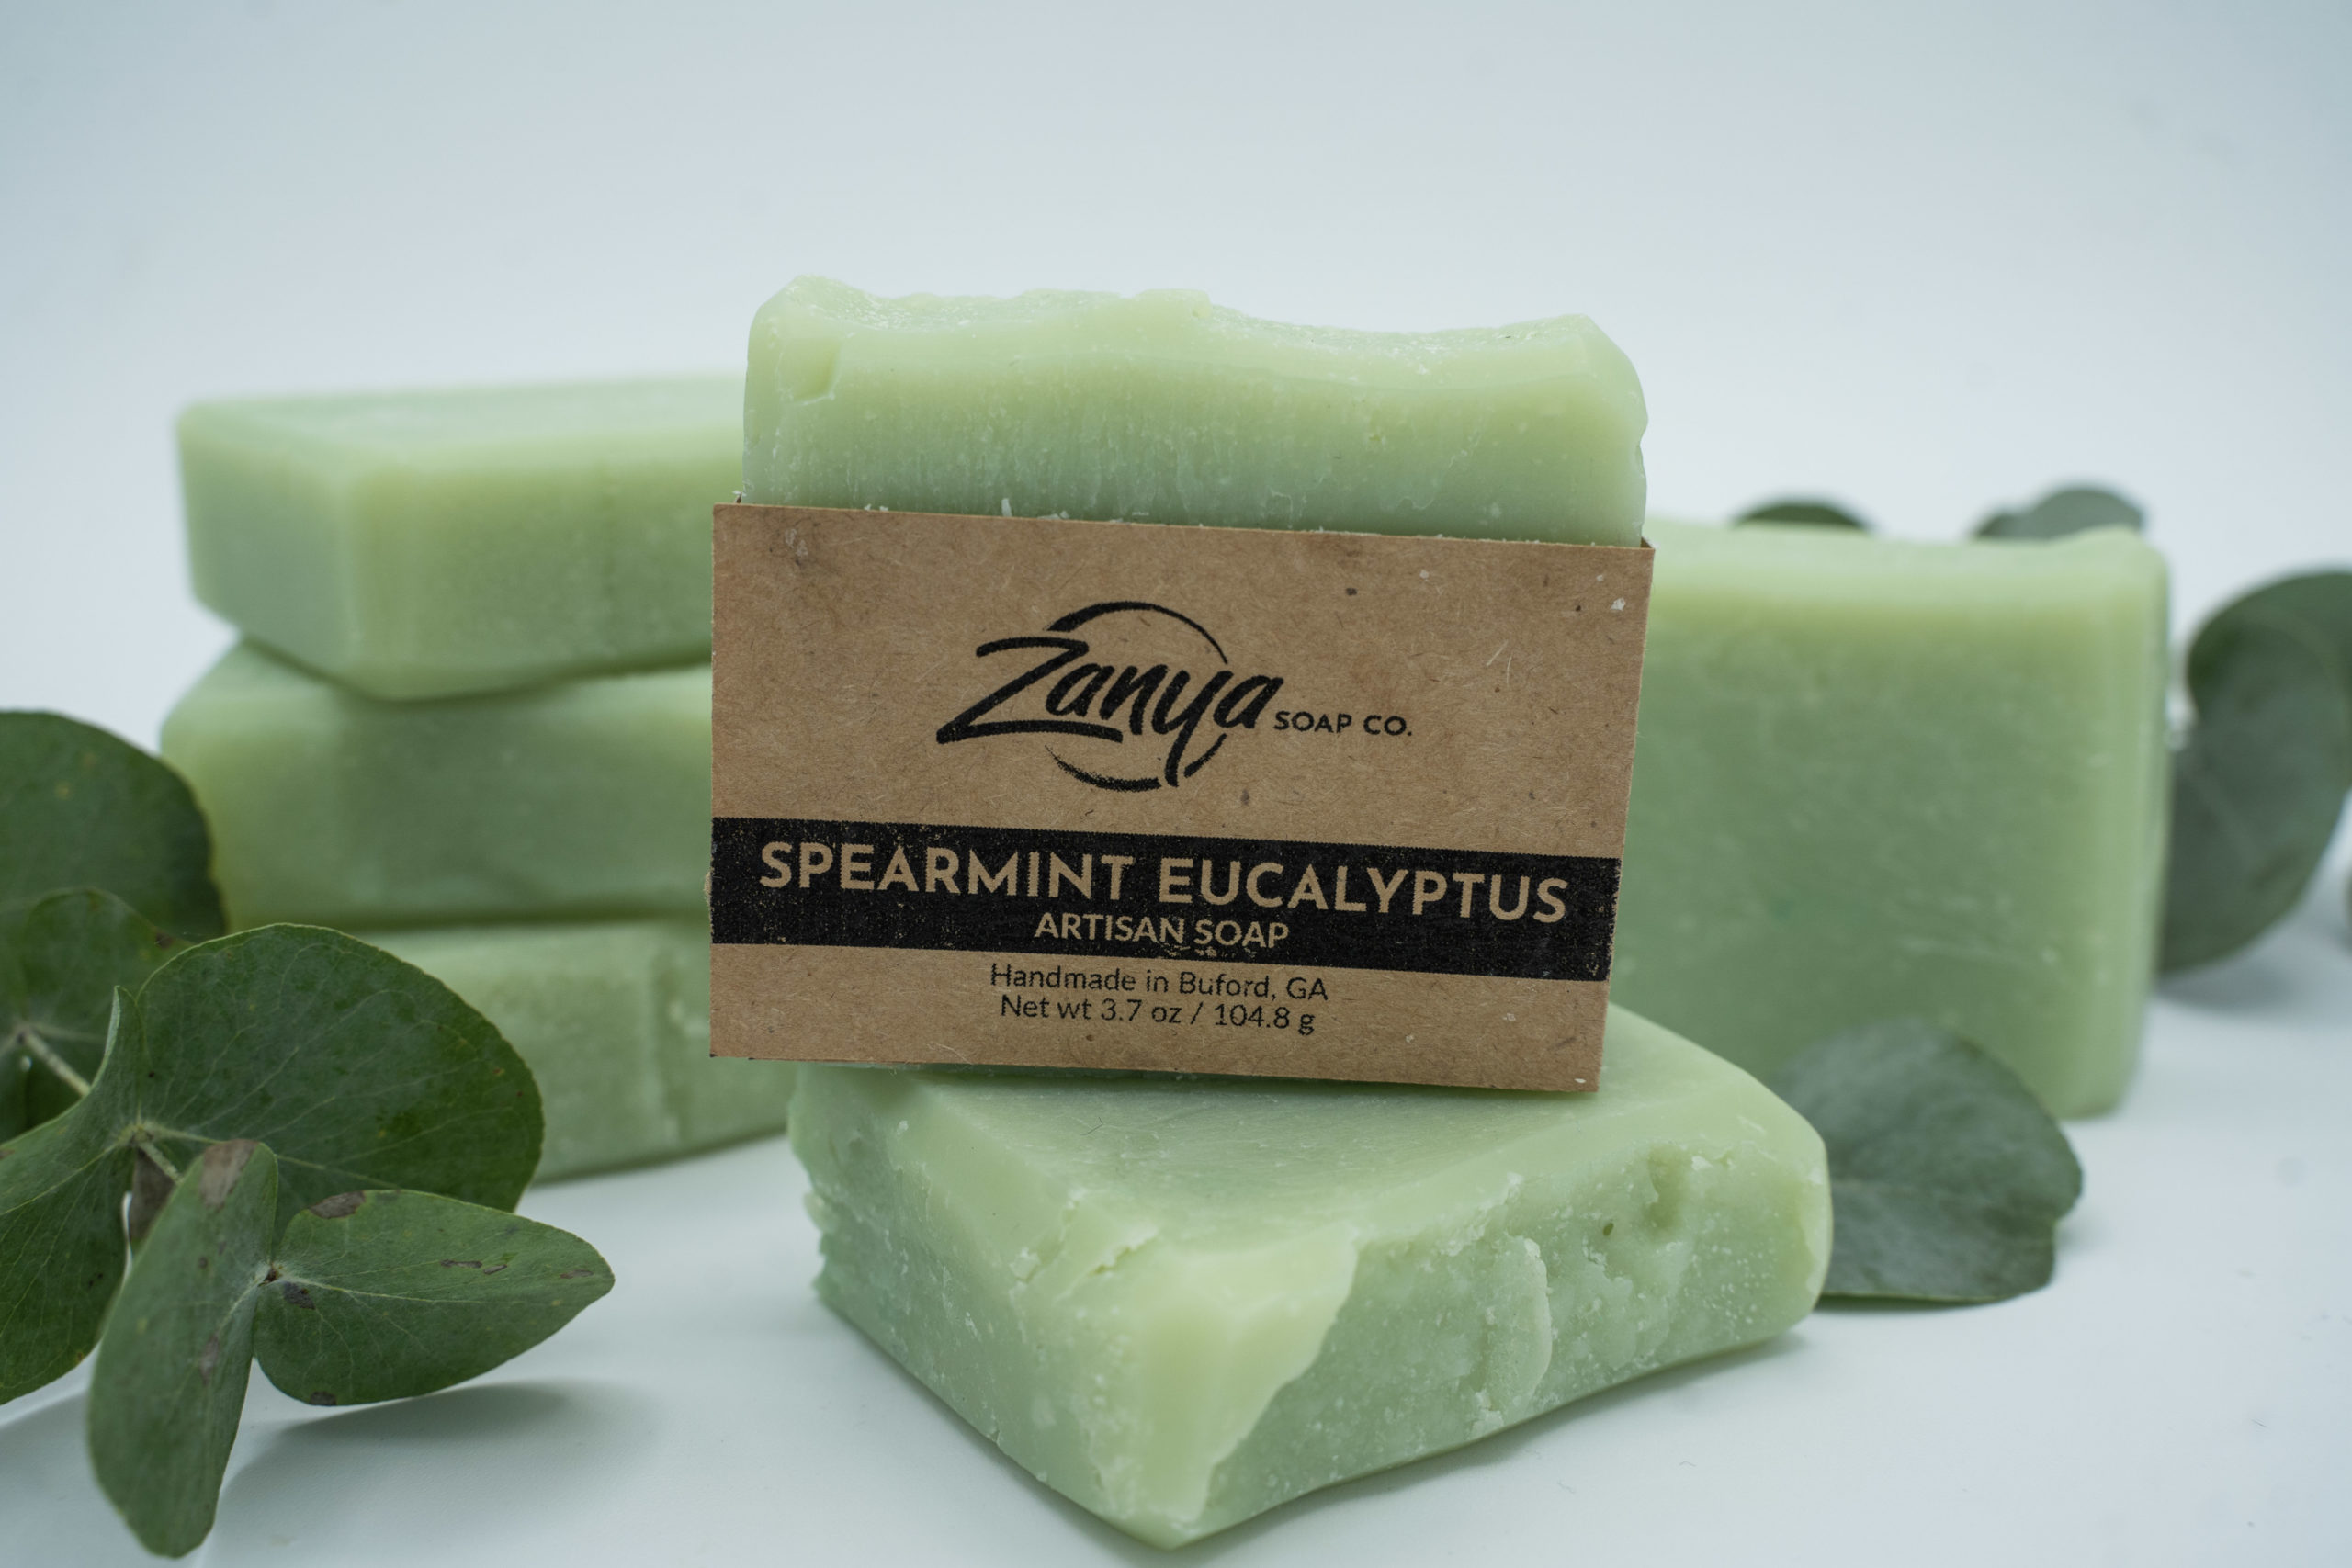 Rosemary Mint & Eucalyptus Shea Butter Soap – Nailah's Shea